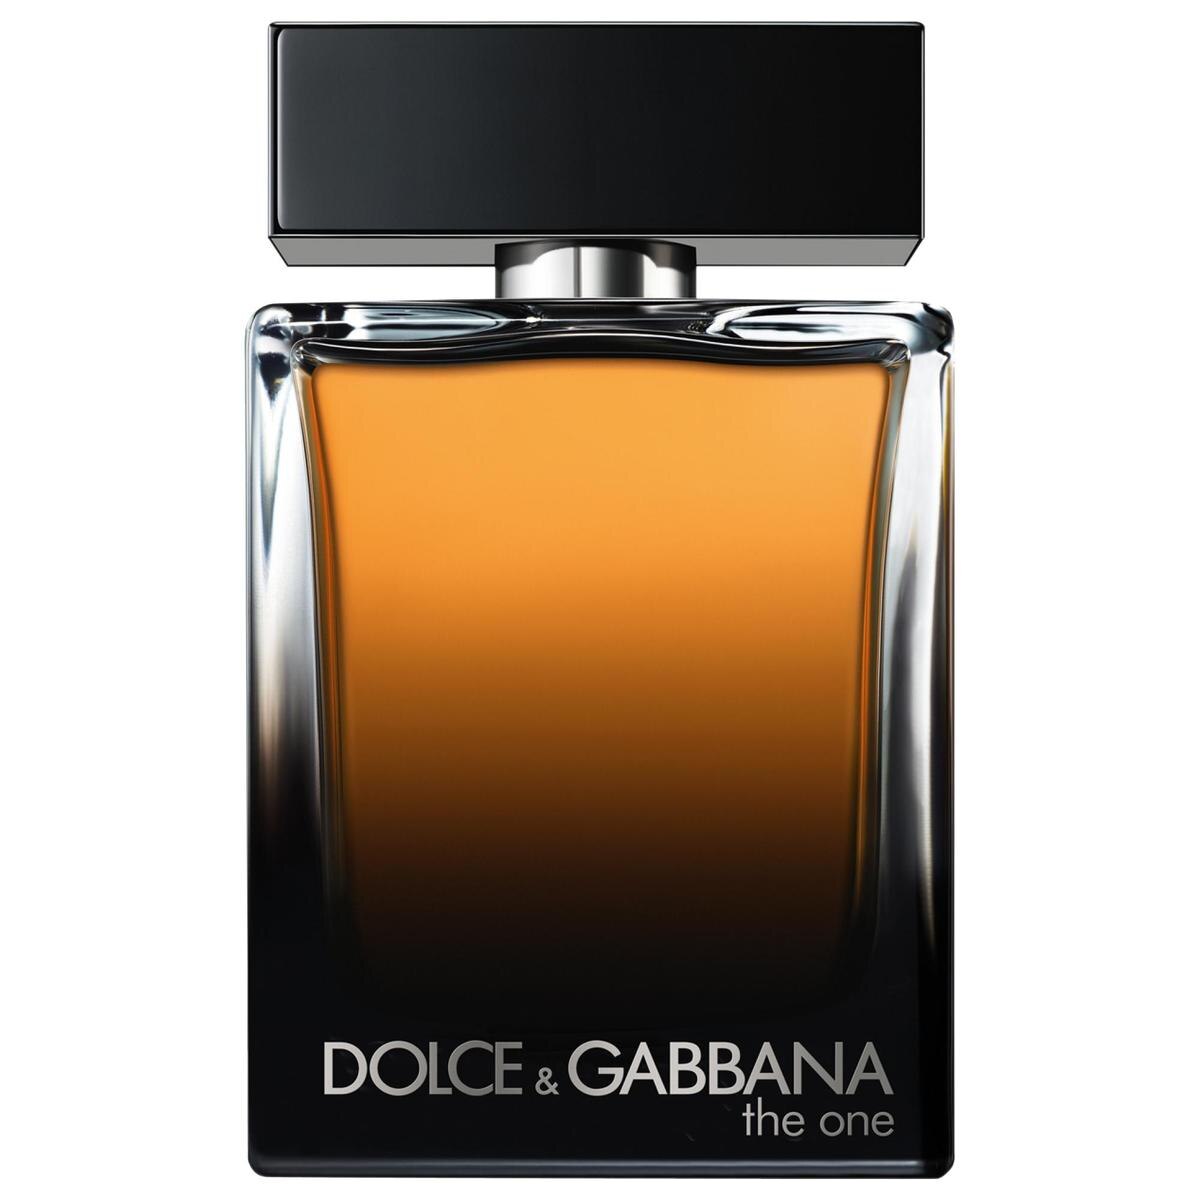 Дольче габбана кью отзывы. Dolce & Gabbana: the one for men EDP. Dolce Gabbana the one. Dolce Gabbana the one мужские. Dolce Gabbana Parfum men.